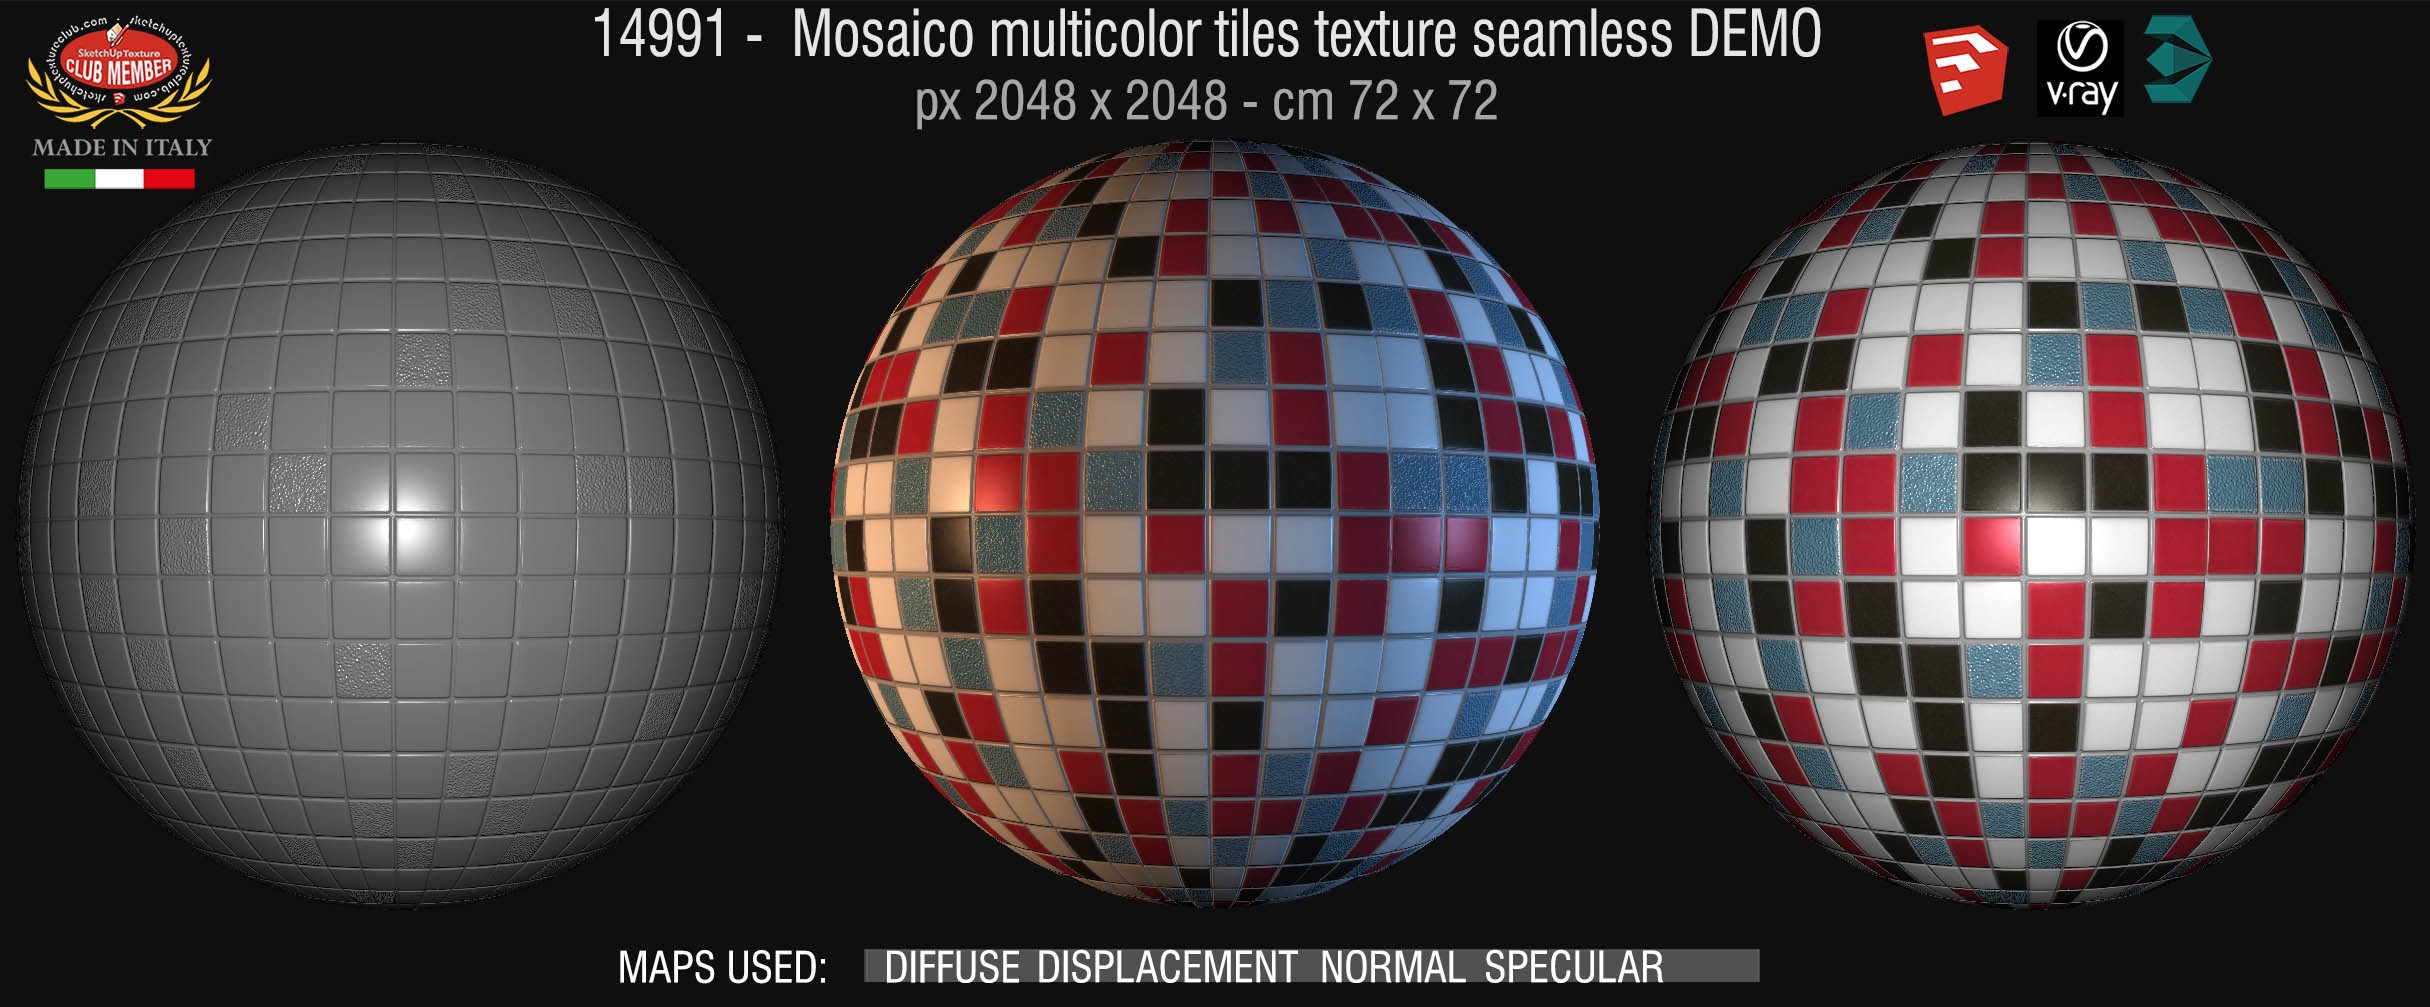 14991 Mosaico multicolor tiles texture seamless + maps DEMO